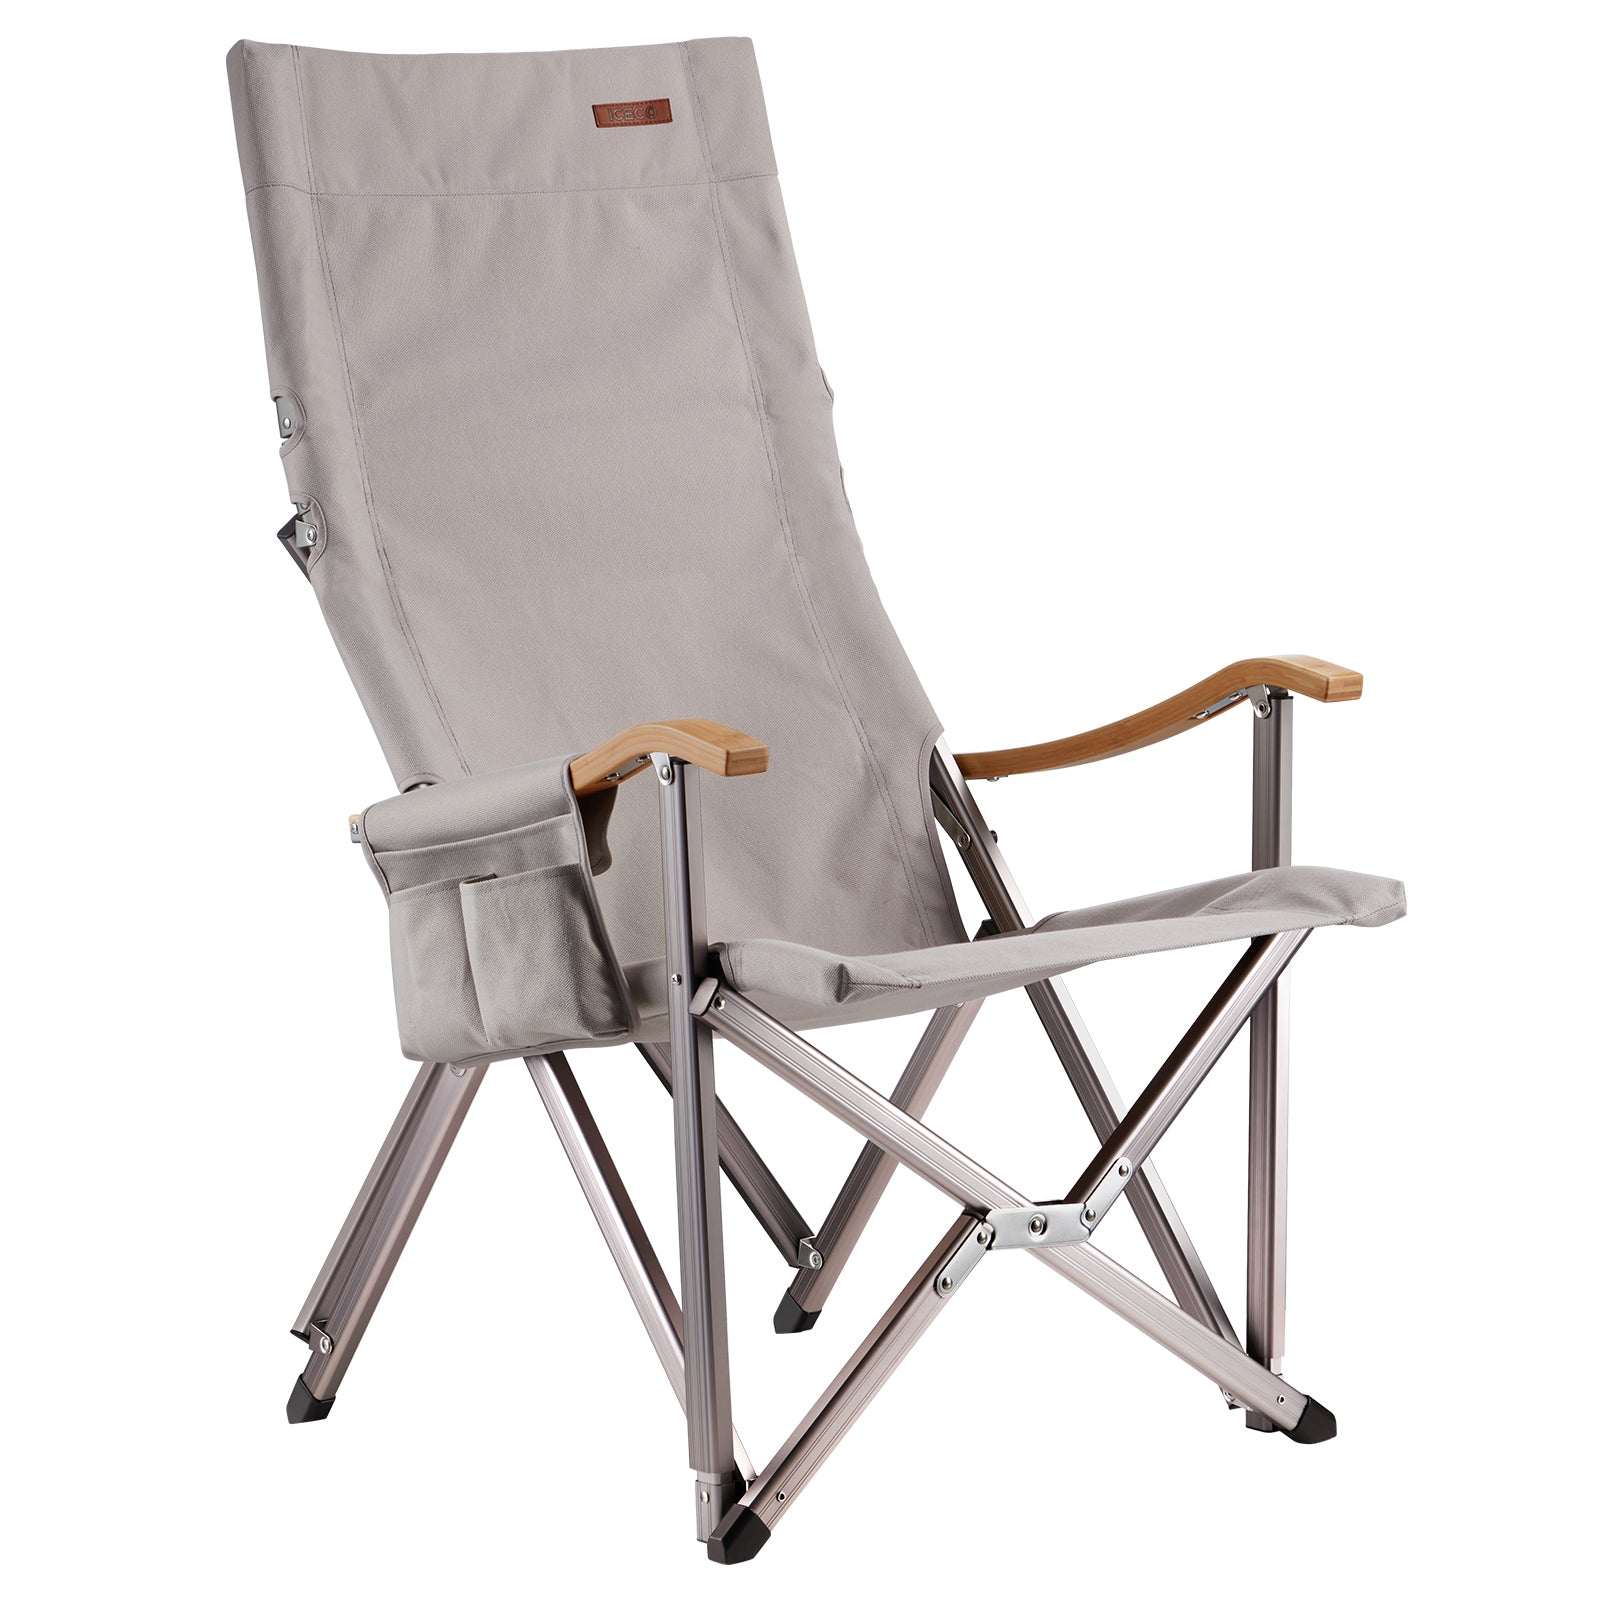 New! Hi1600 Folding Camping Chair